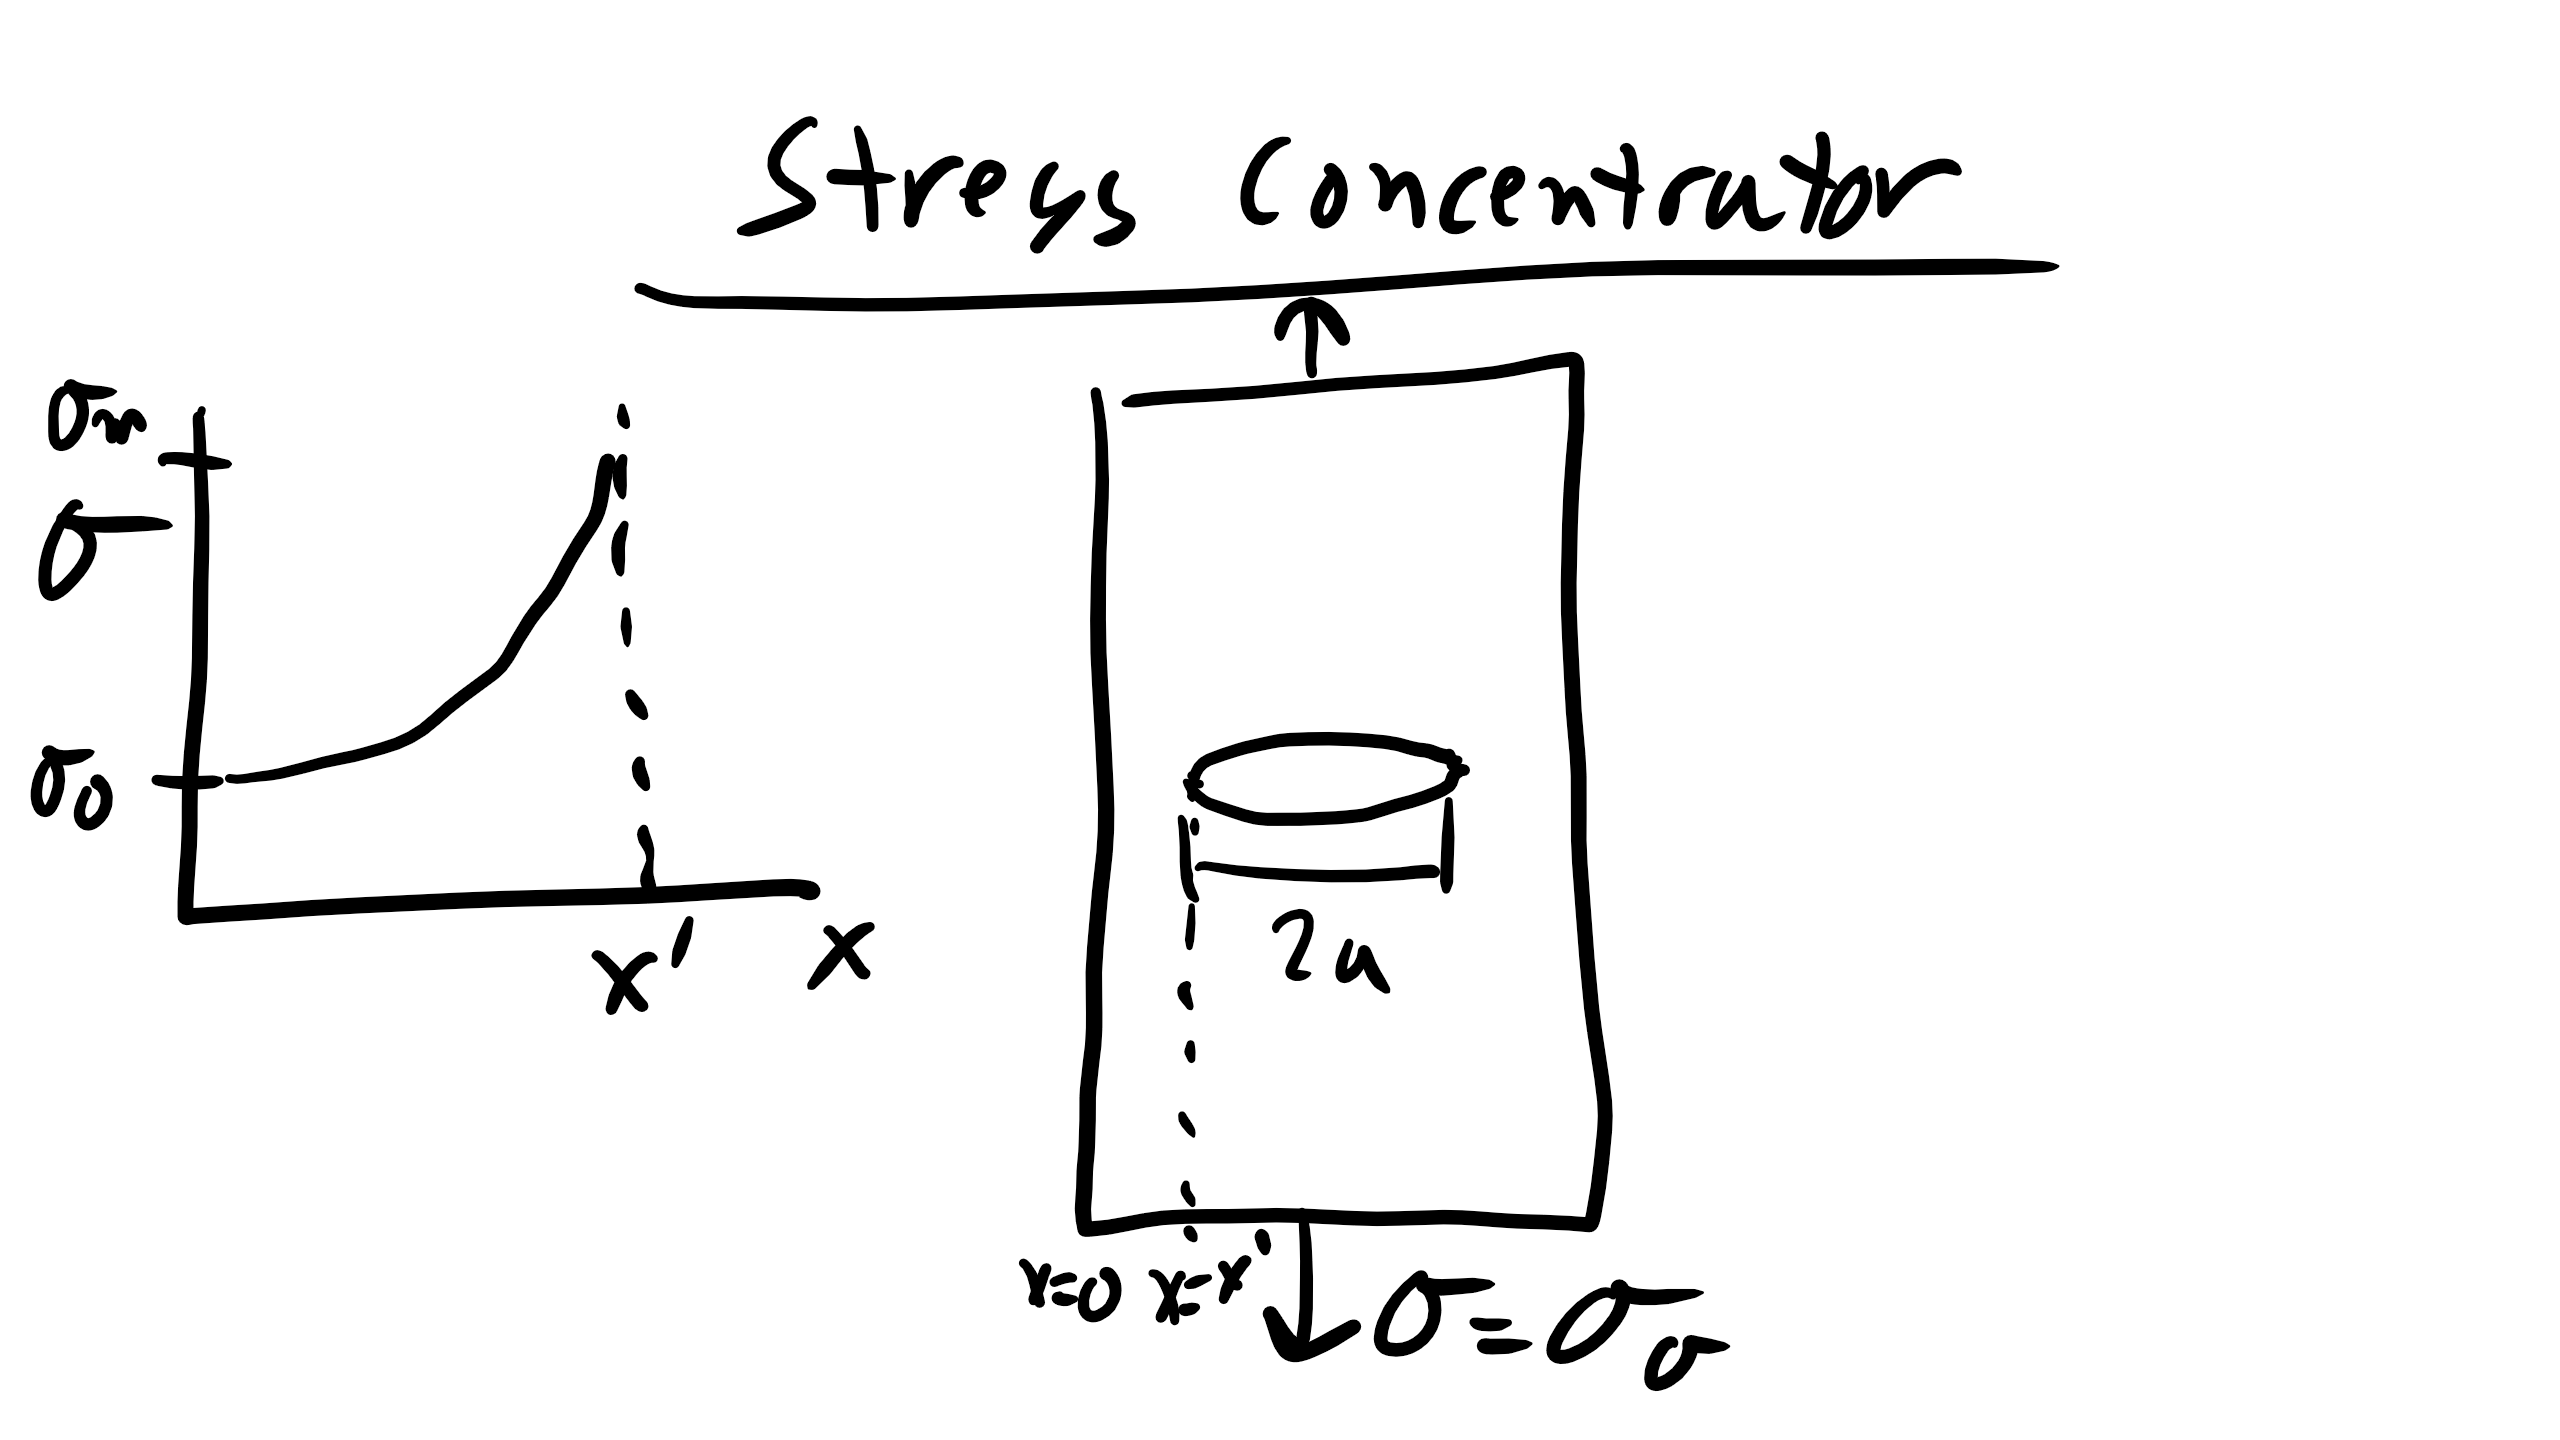 stressconcentrator.png